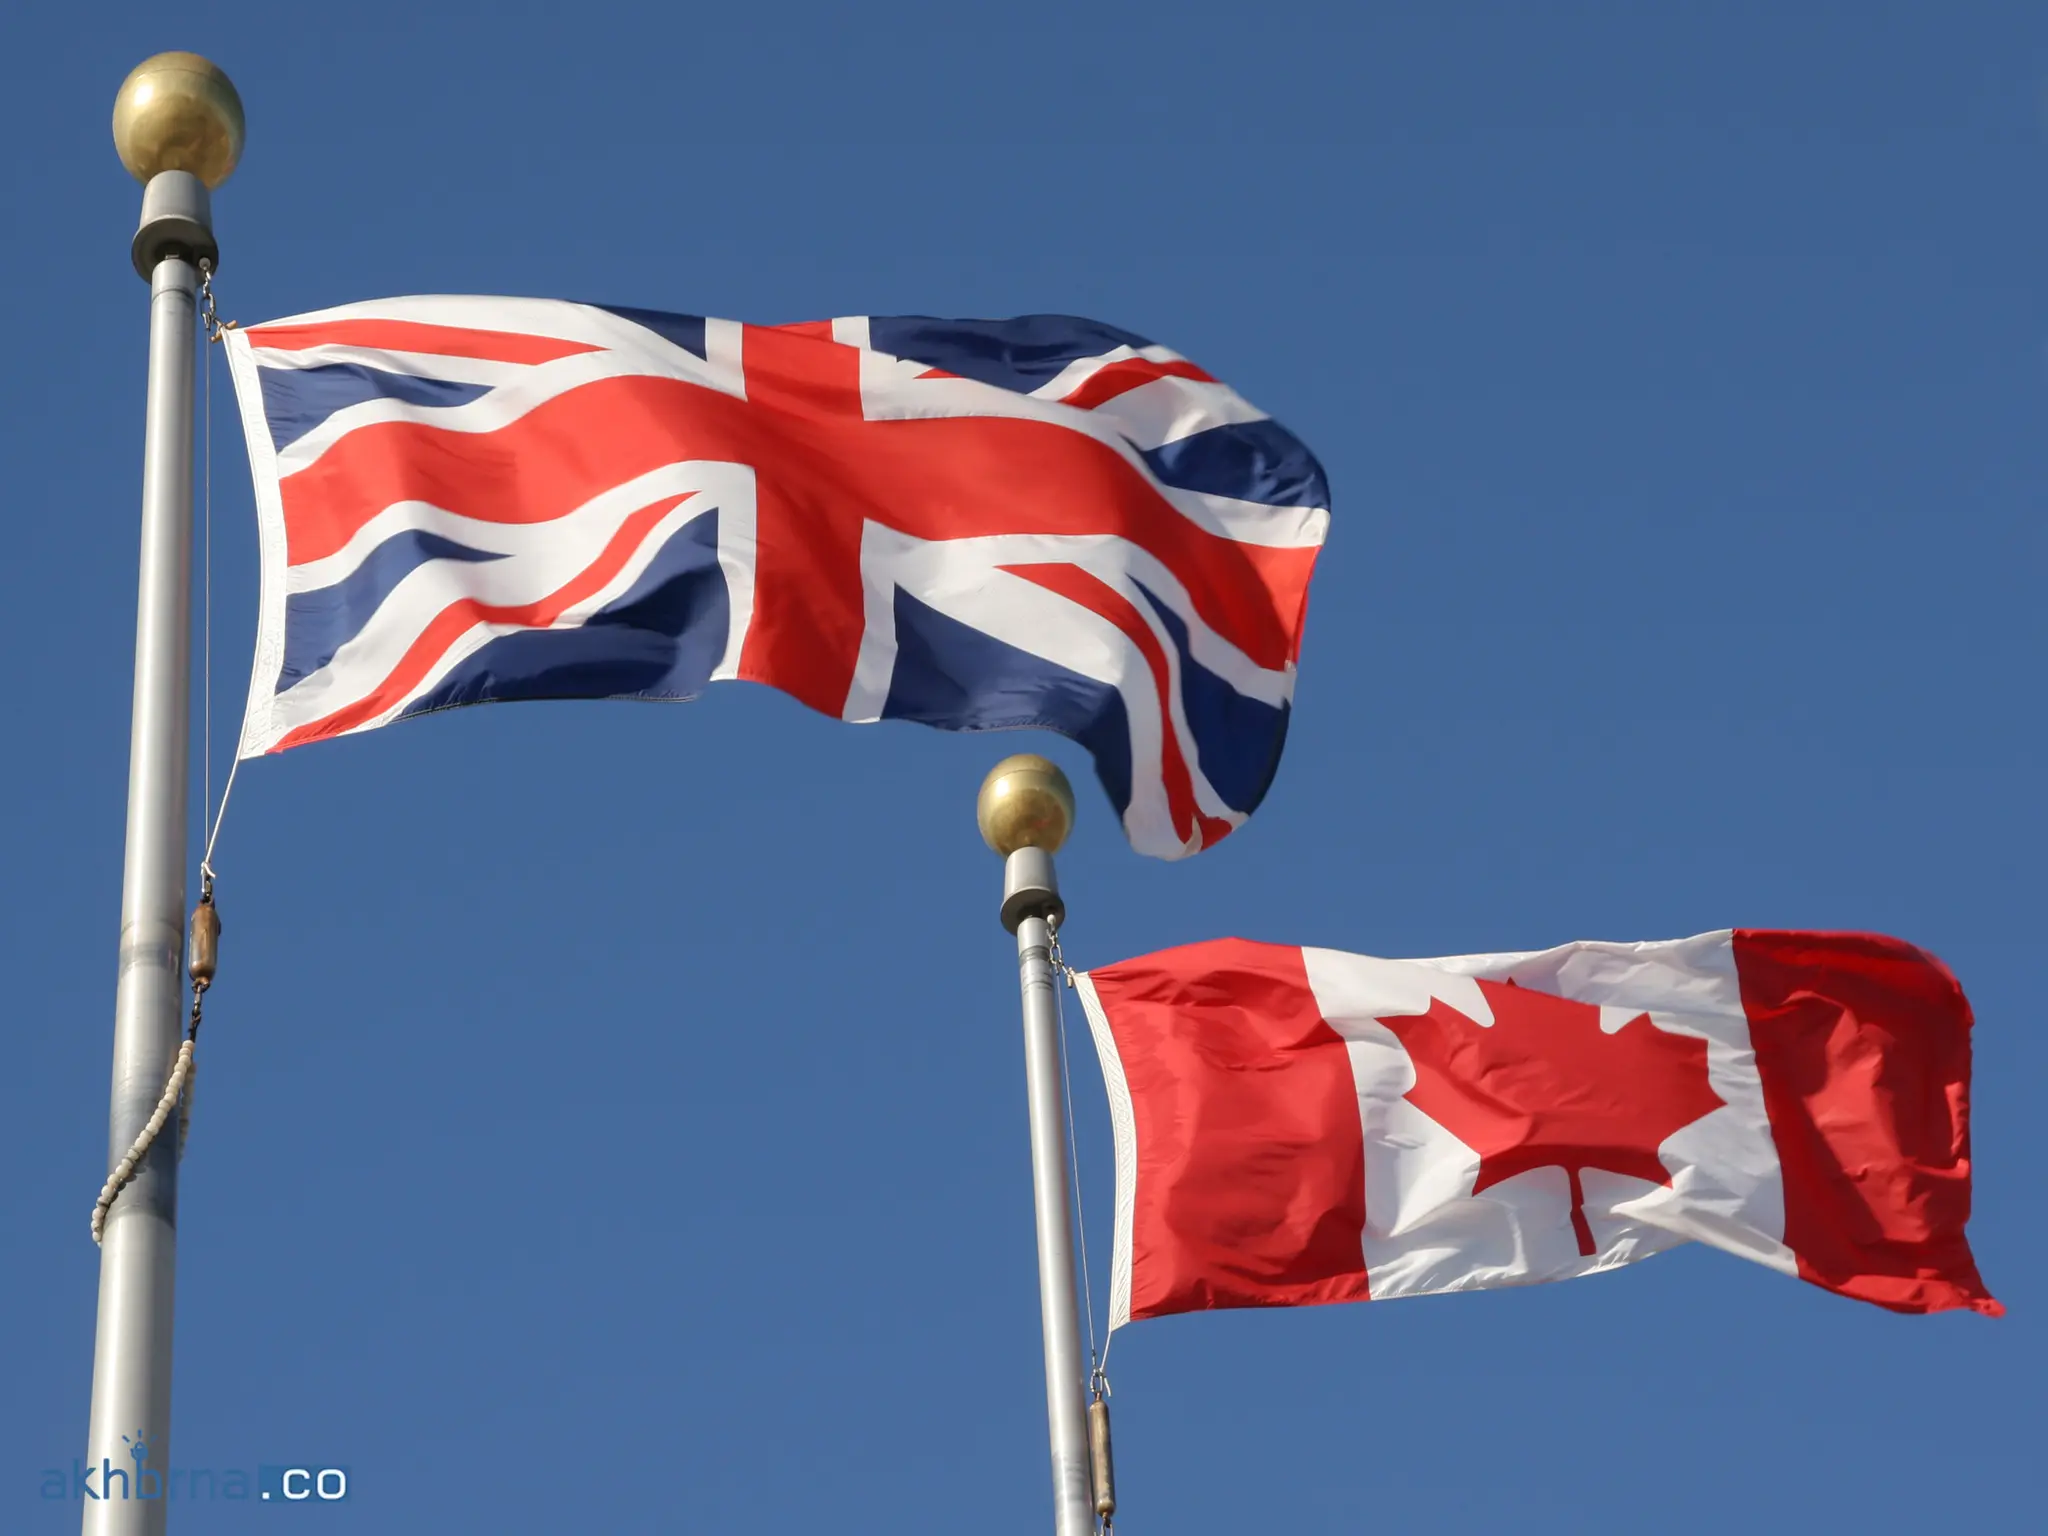 Britain announces suspension talks on free trade with Canada